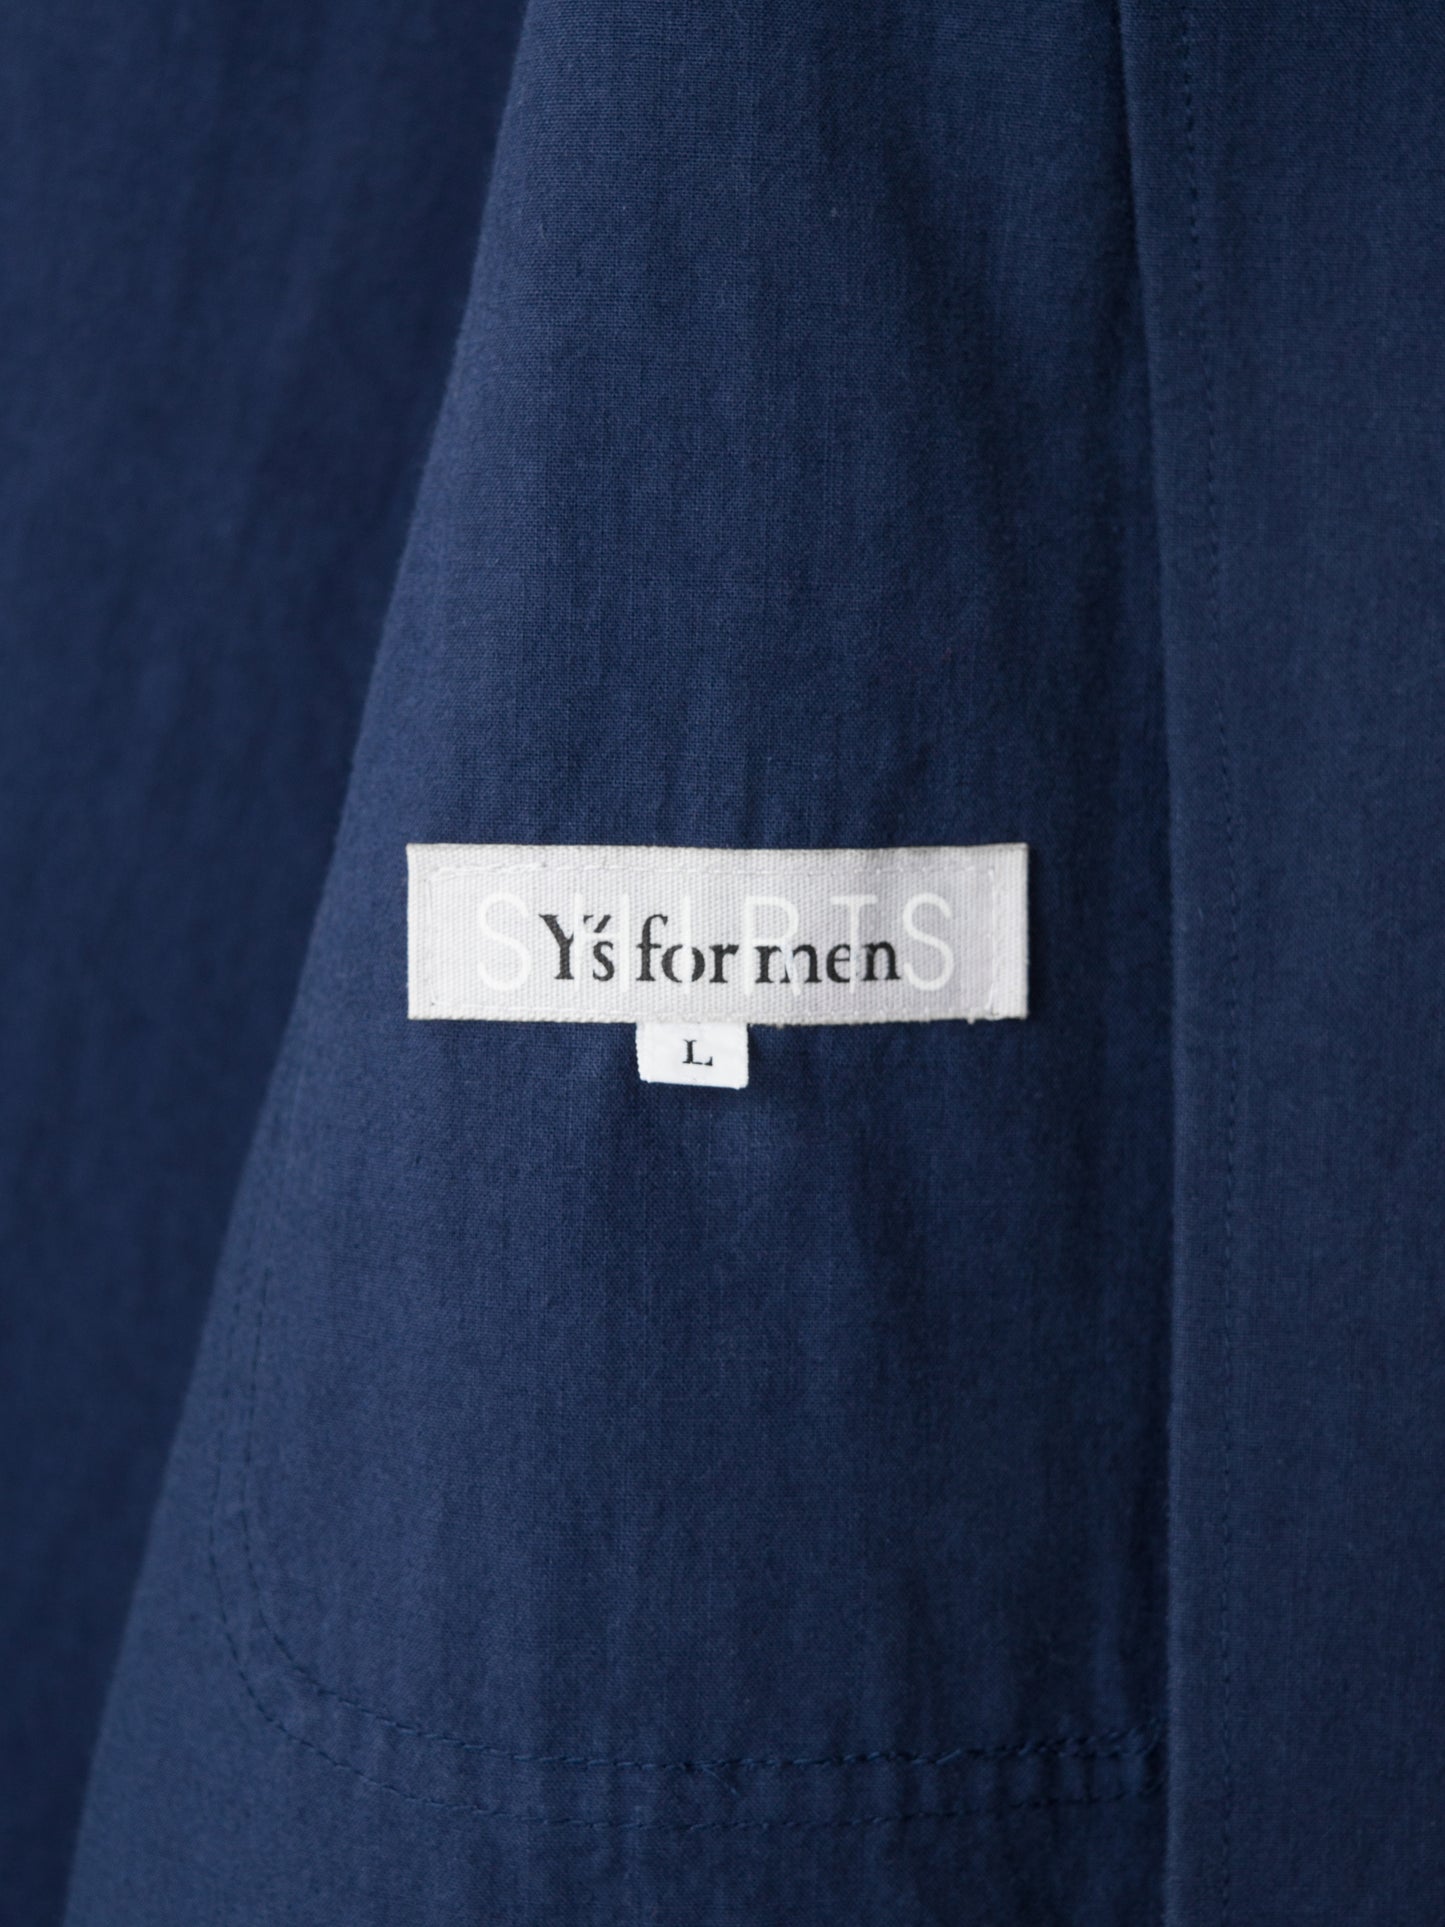 hidden placket tailored jacket blue ∙ cotton typewriter ∙ medium